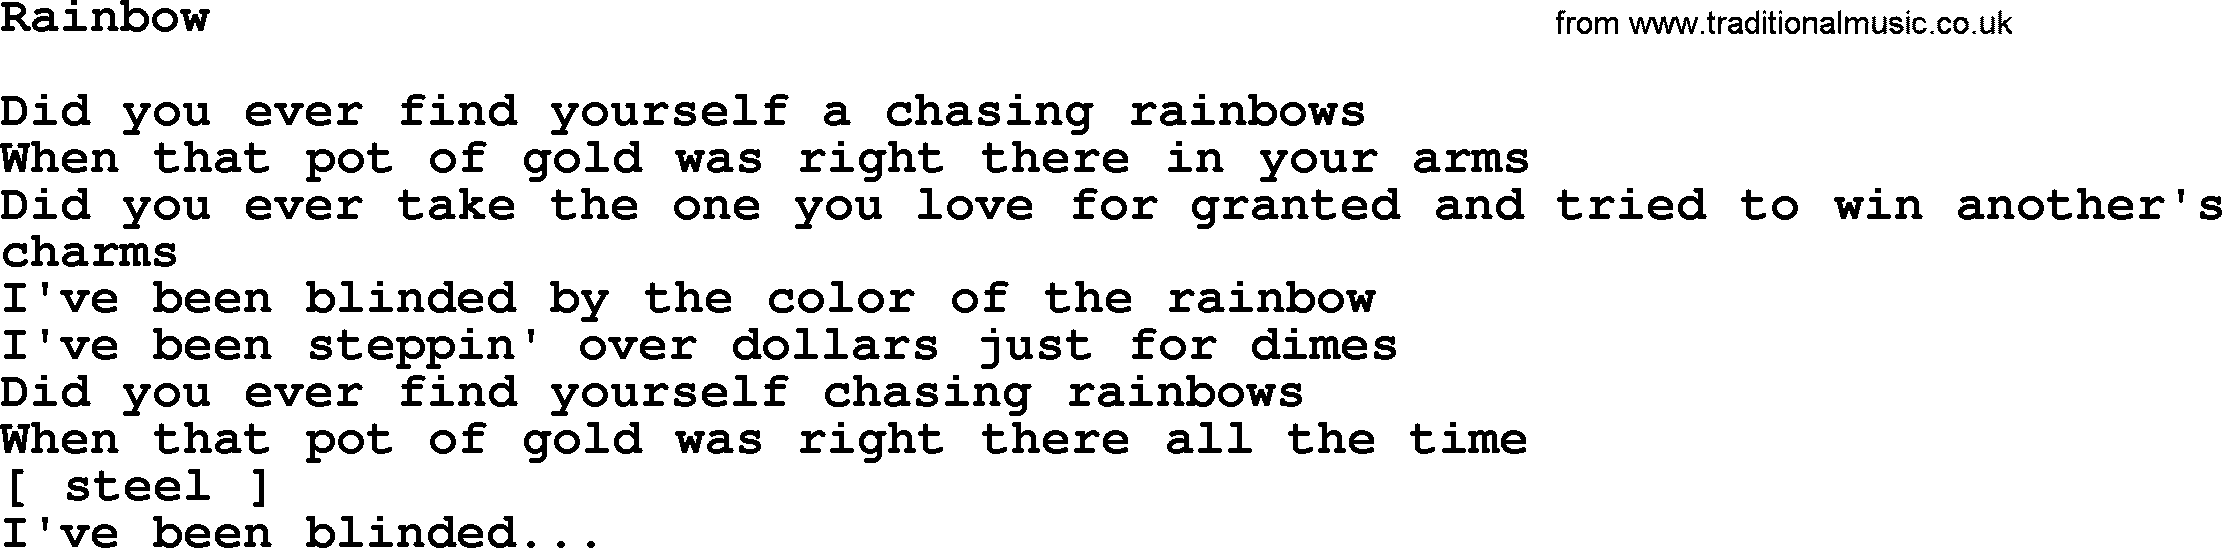 Marty Robbins song: Rainbow, lyrics